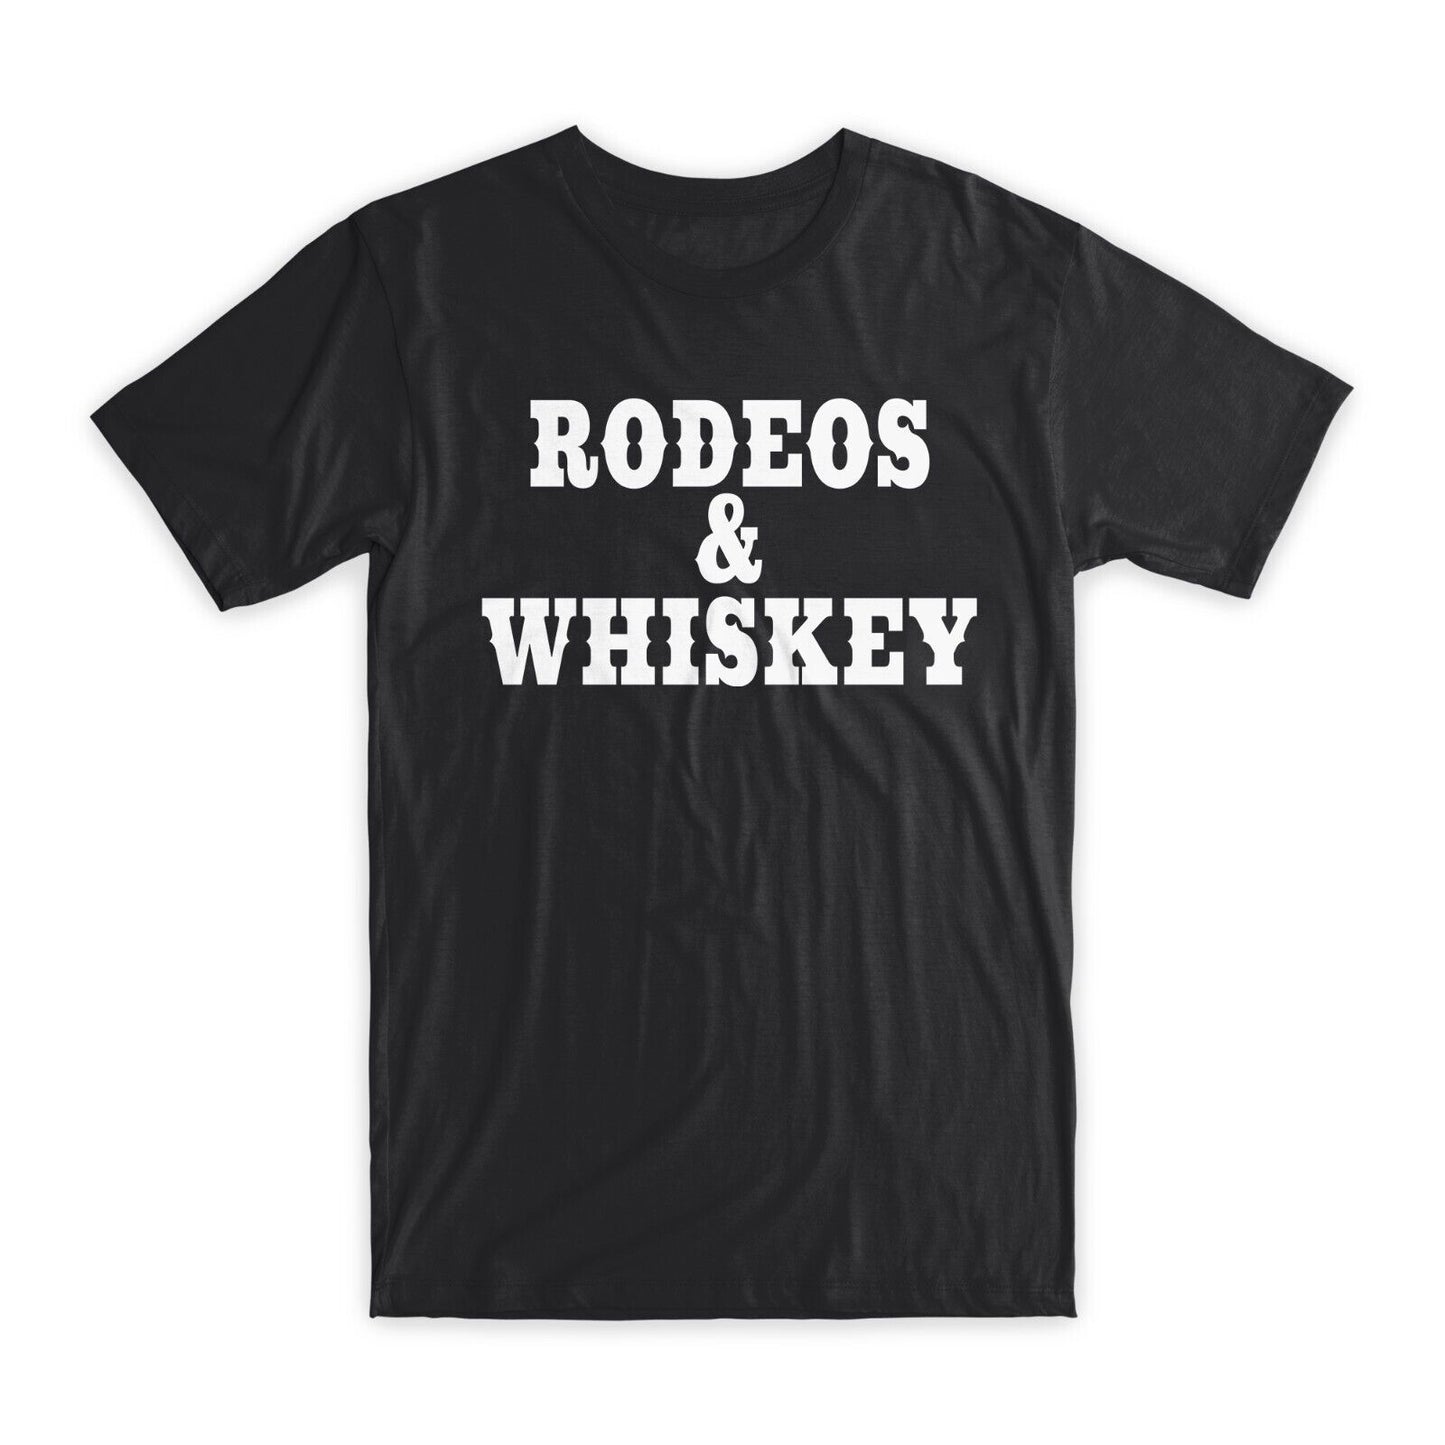 Rodeos & Whiskey Print T-Shirt Premium Soft Cotton Crew Neck Funny Tee Gift NEW